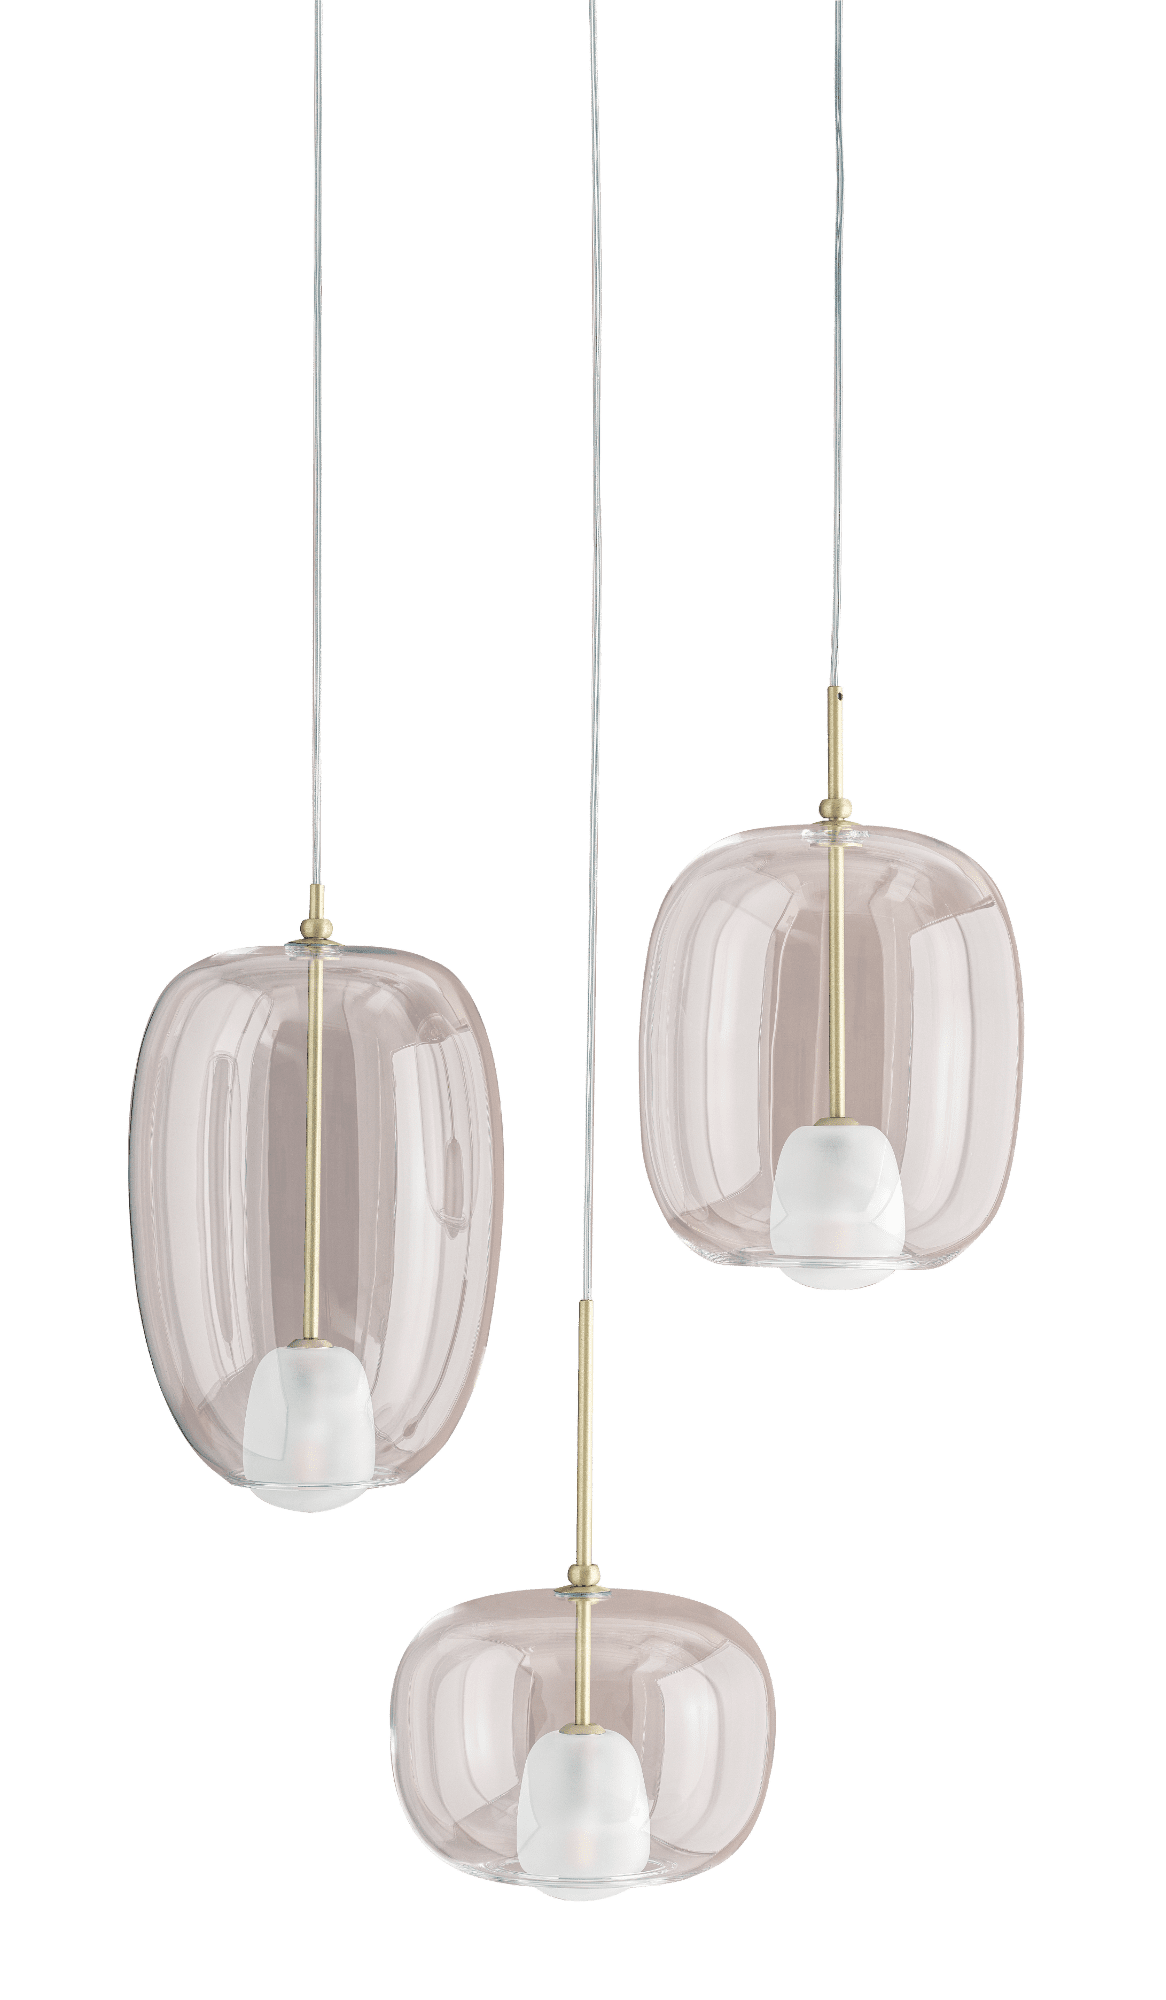 Blow Medium pendant lamp with borosilicate glass